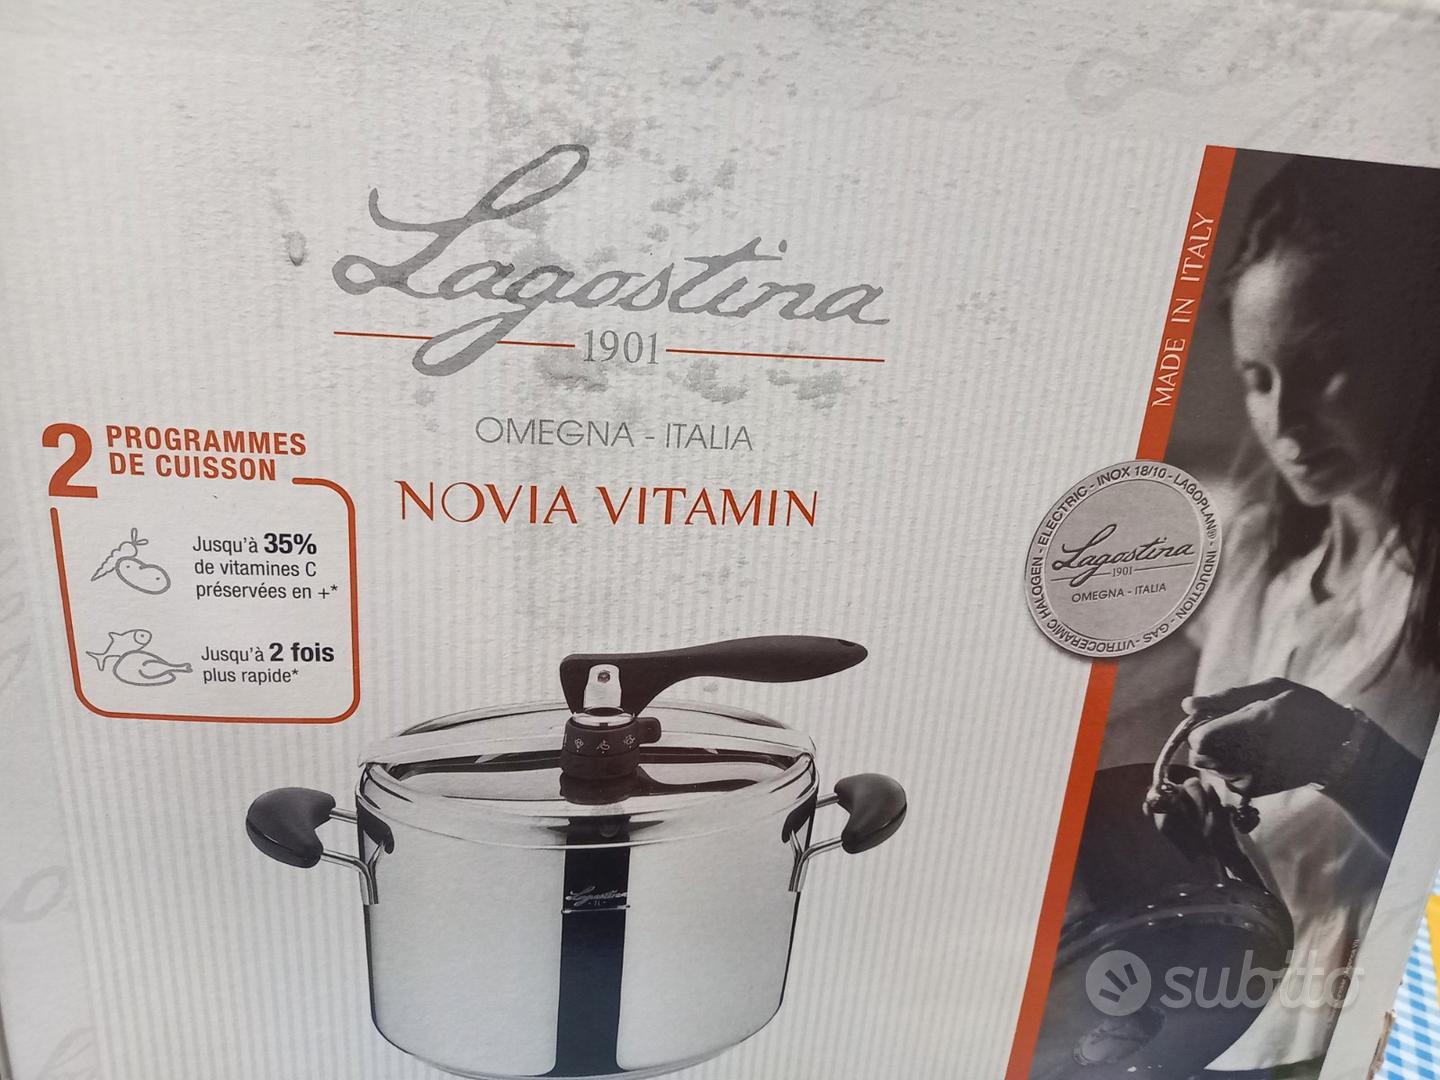 Pentola a pressione Novia® Vitamin by Lagostina